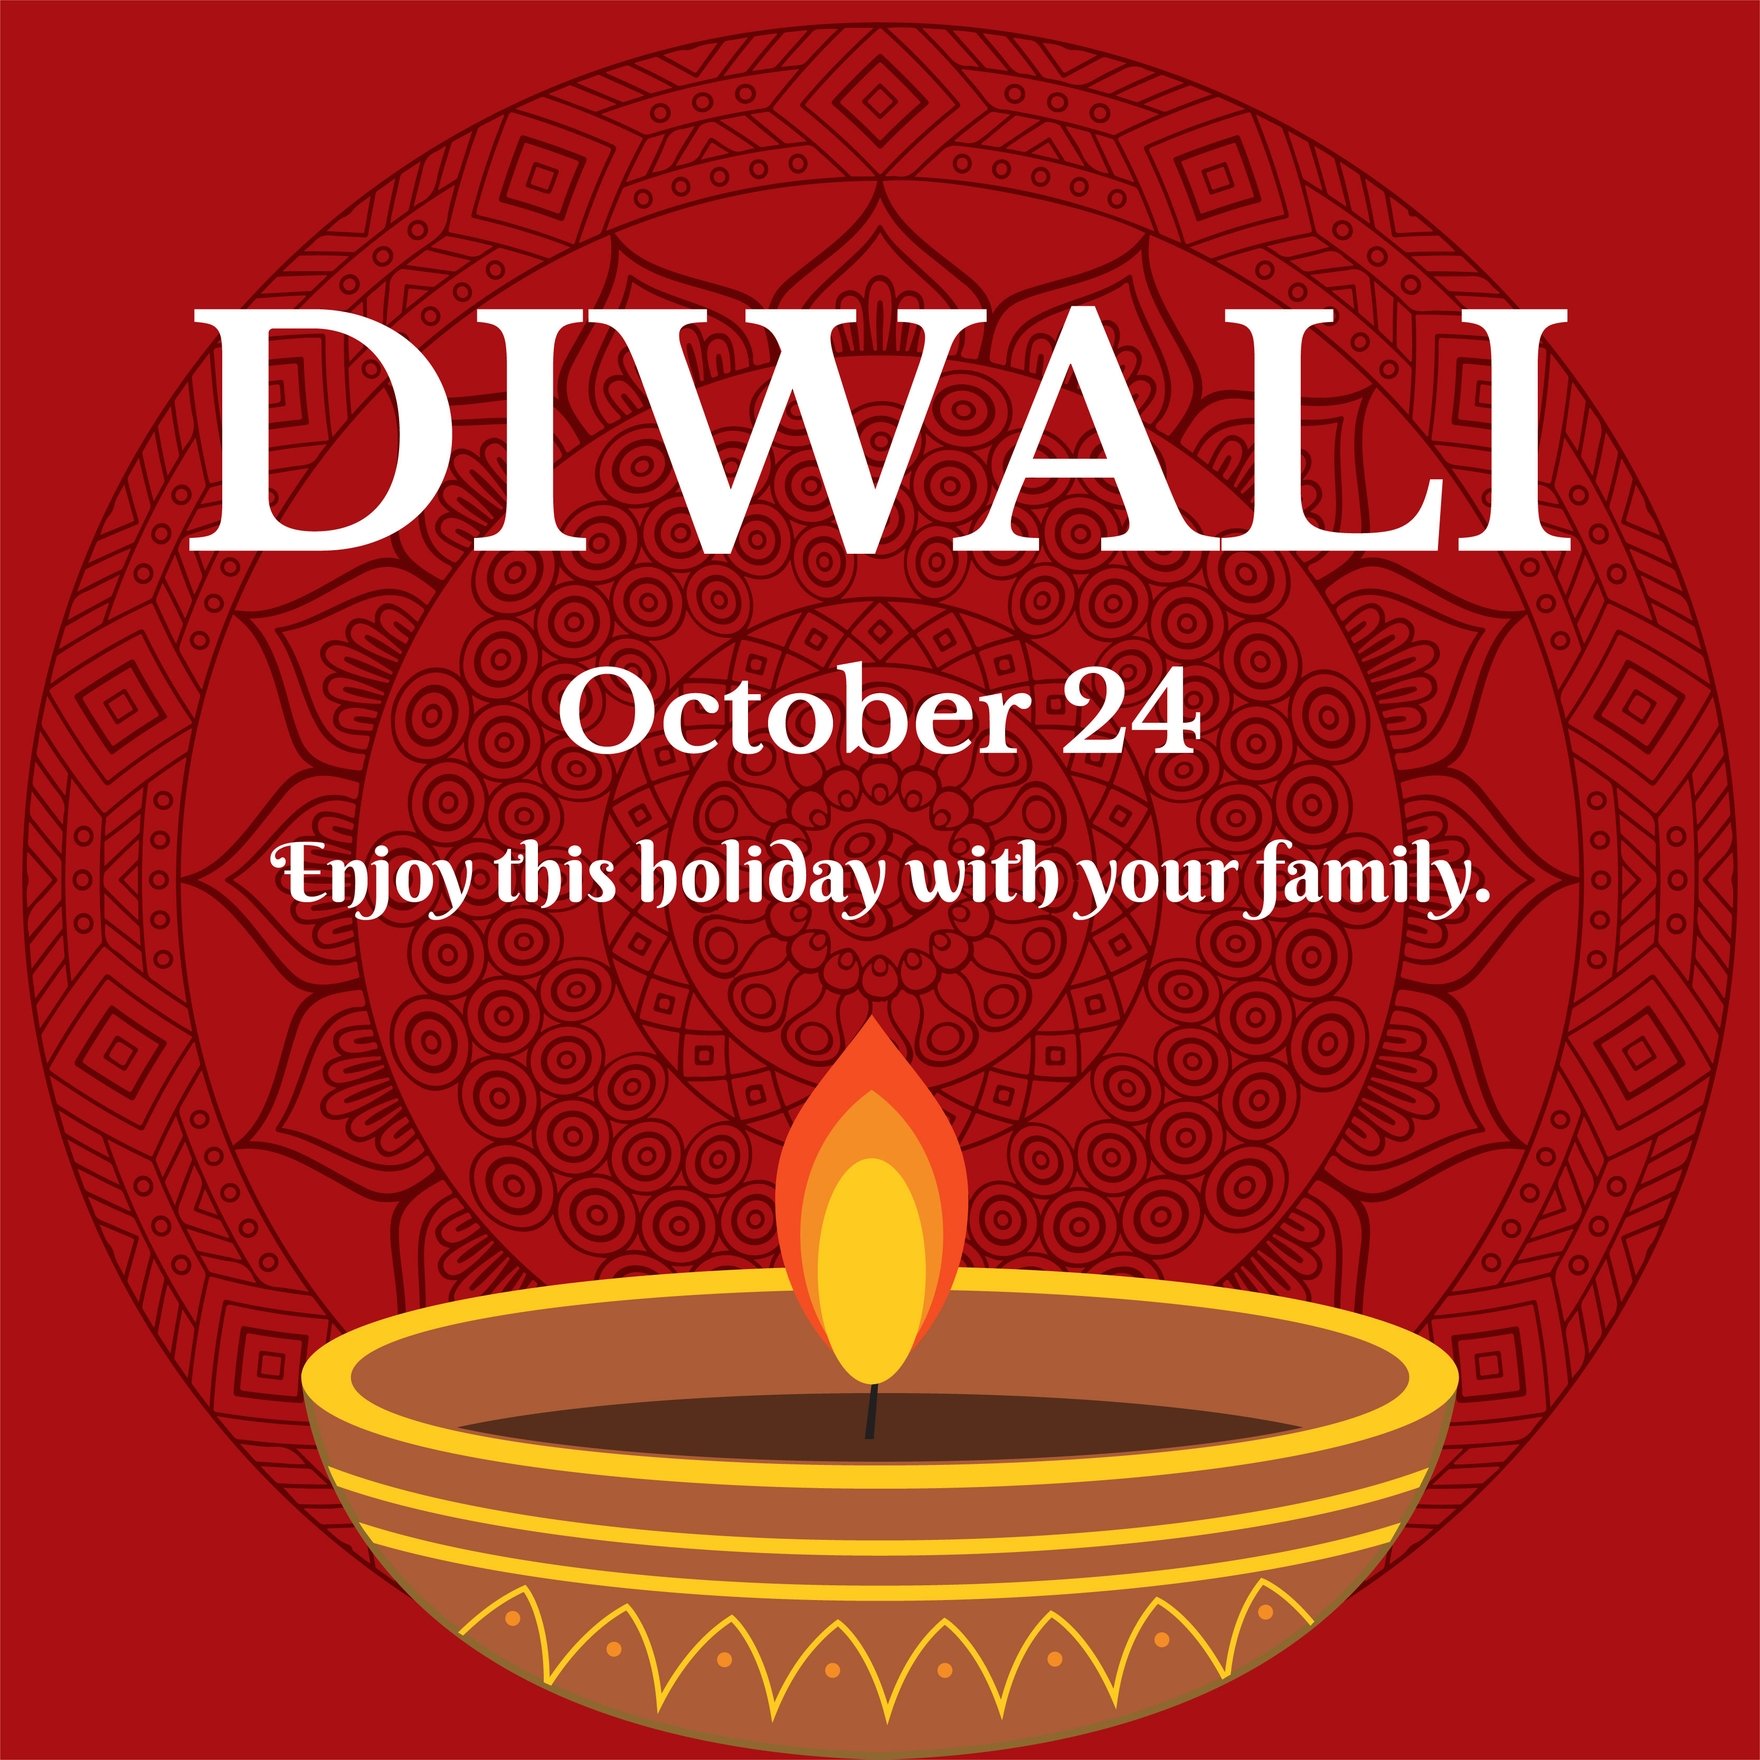 Free Diwali Whatsapp Post in Illustrator, PSD, EPS, SVG, JPG, PNG